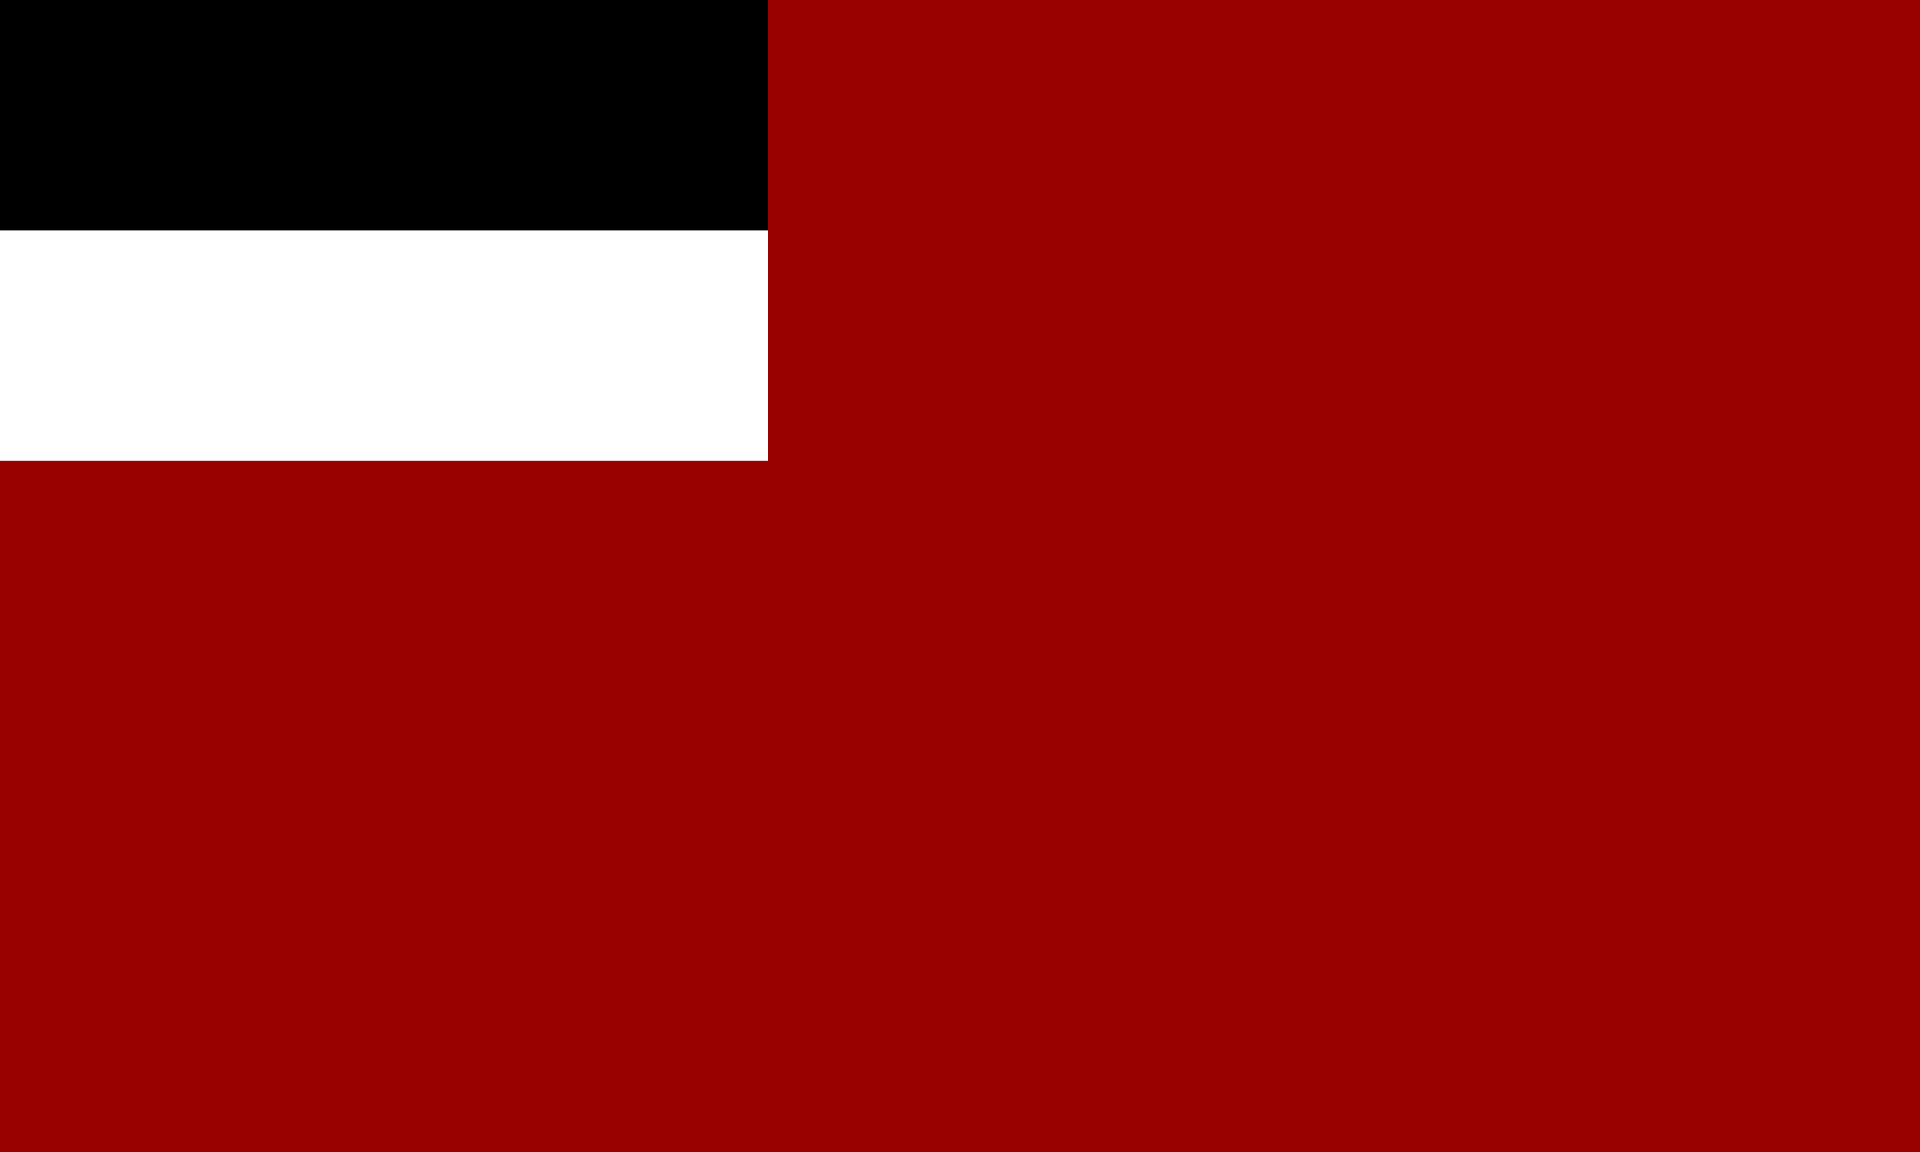 Georgia (1991-2004)